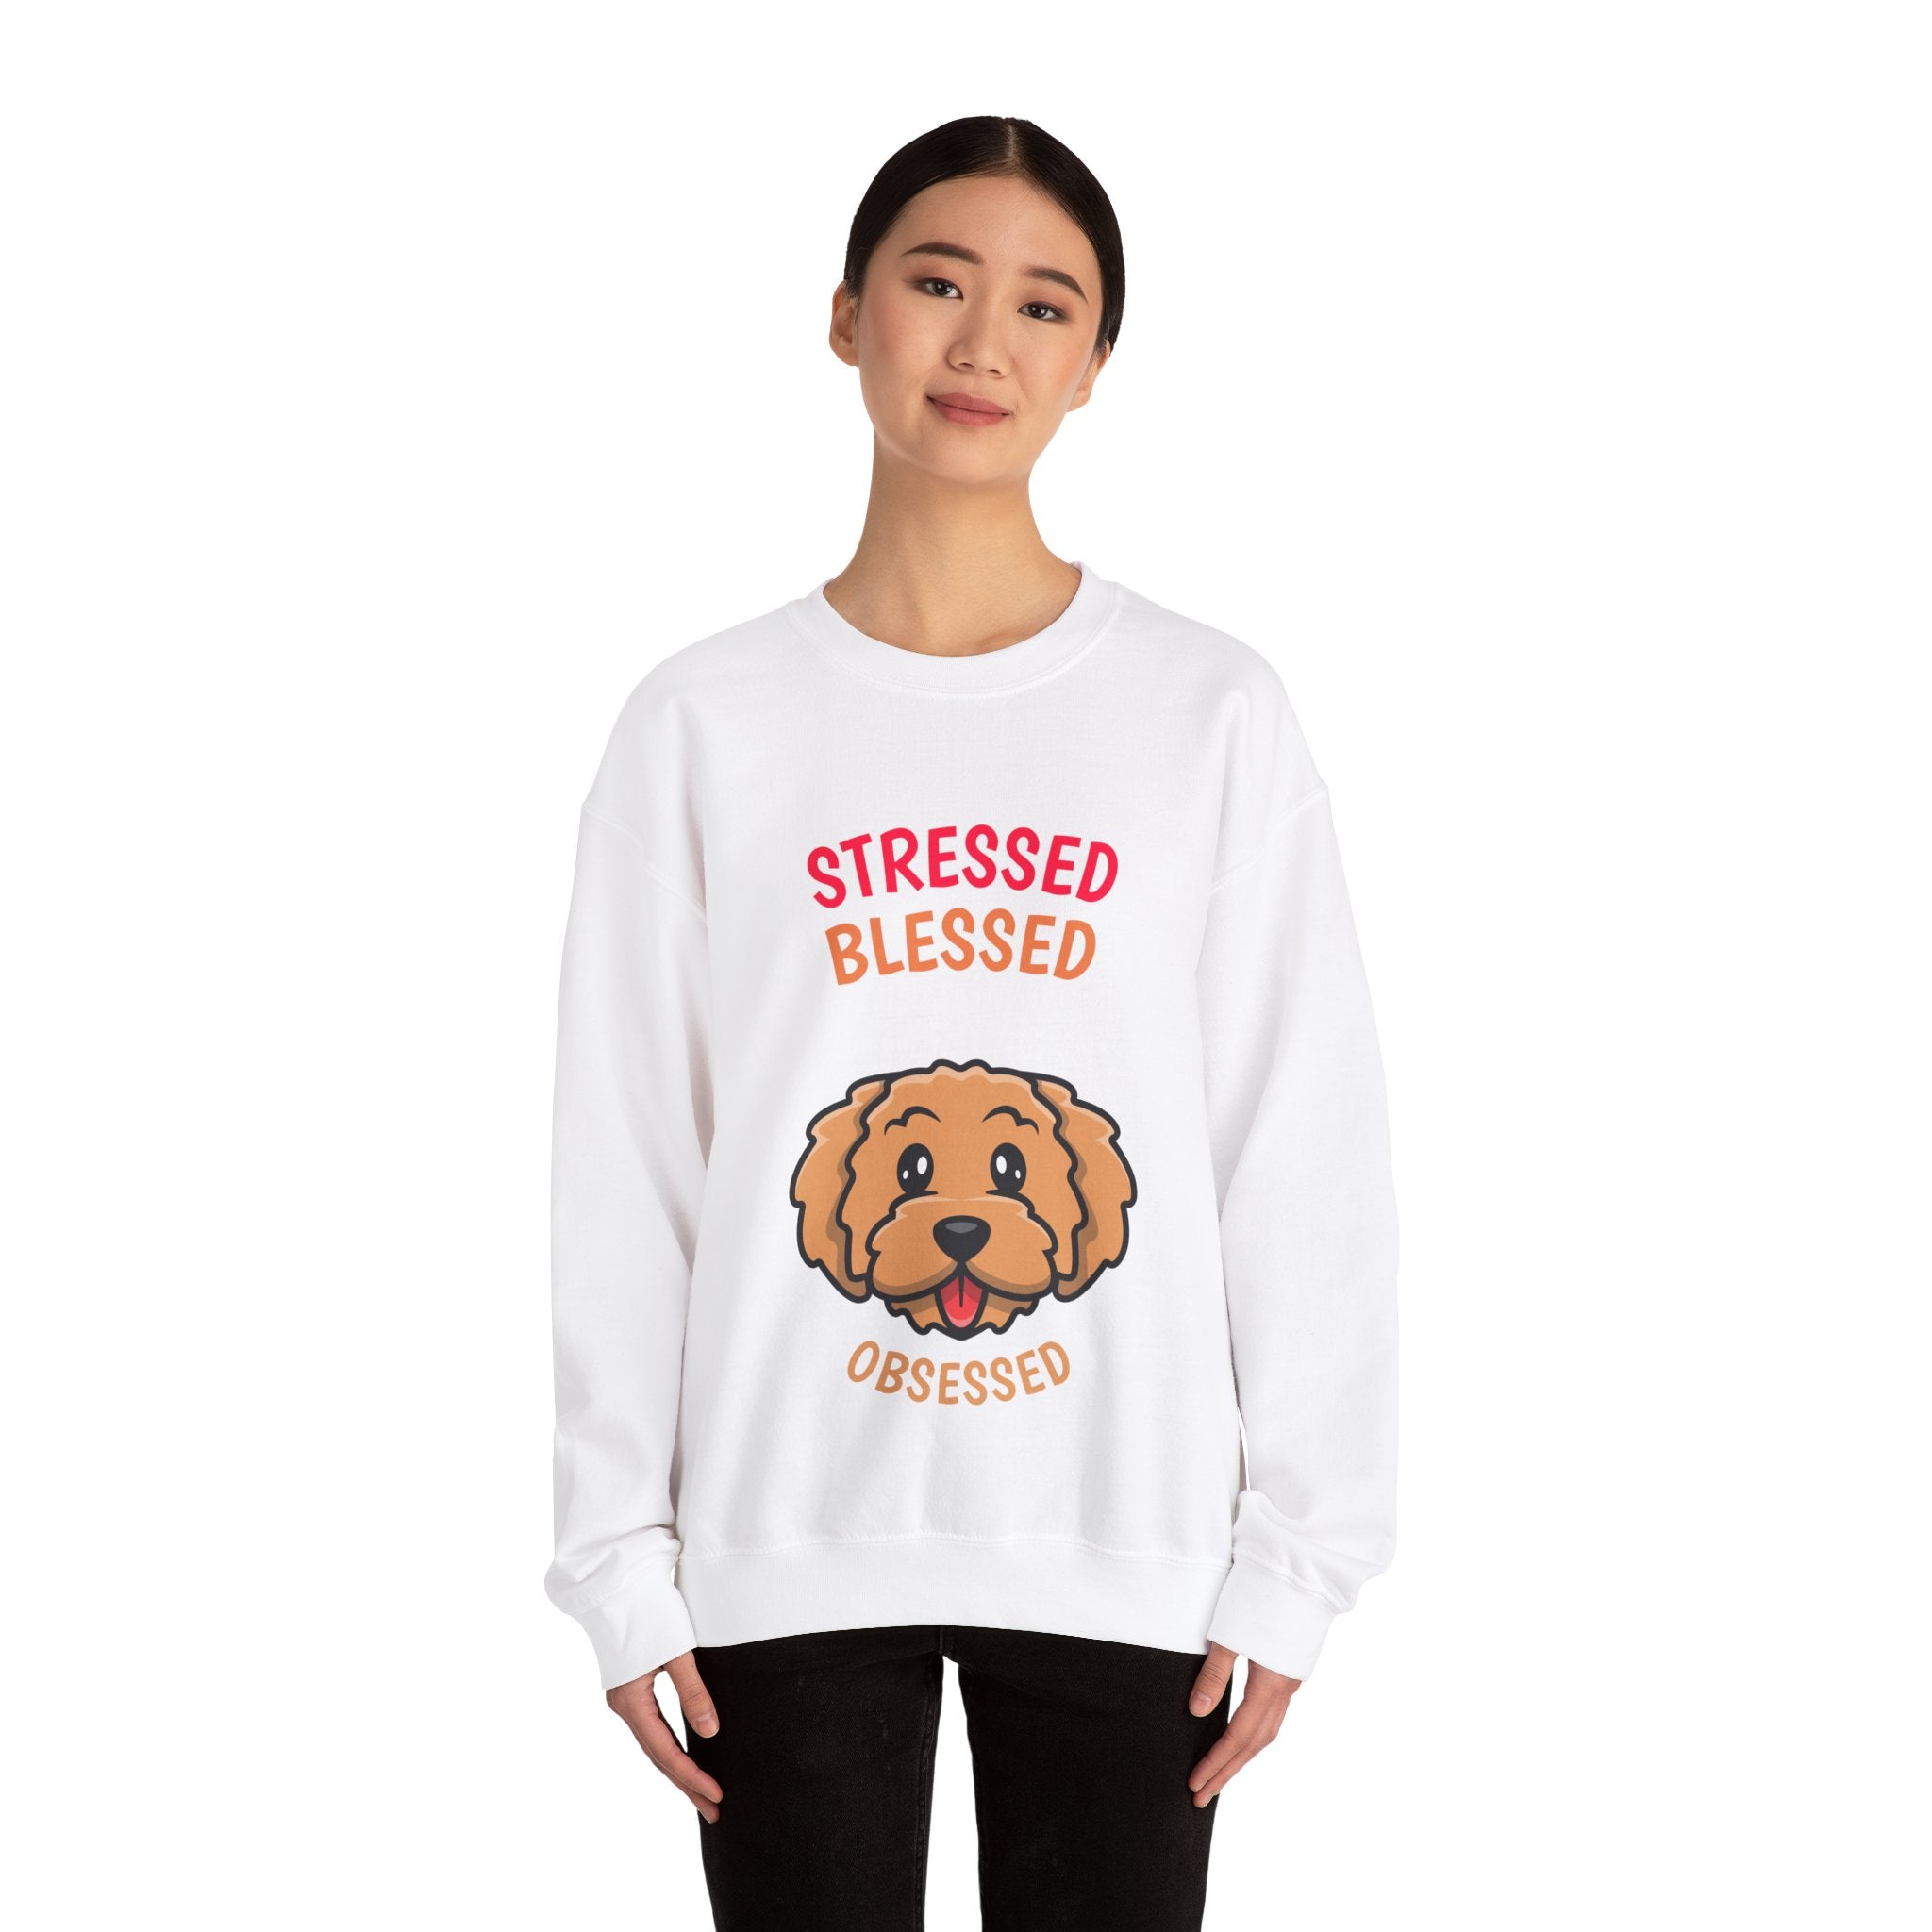 Poodle Obsessed -  Sweatshirt